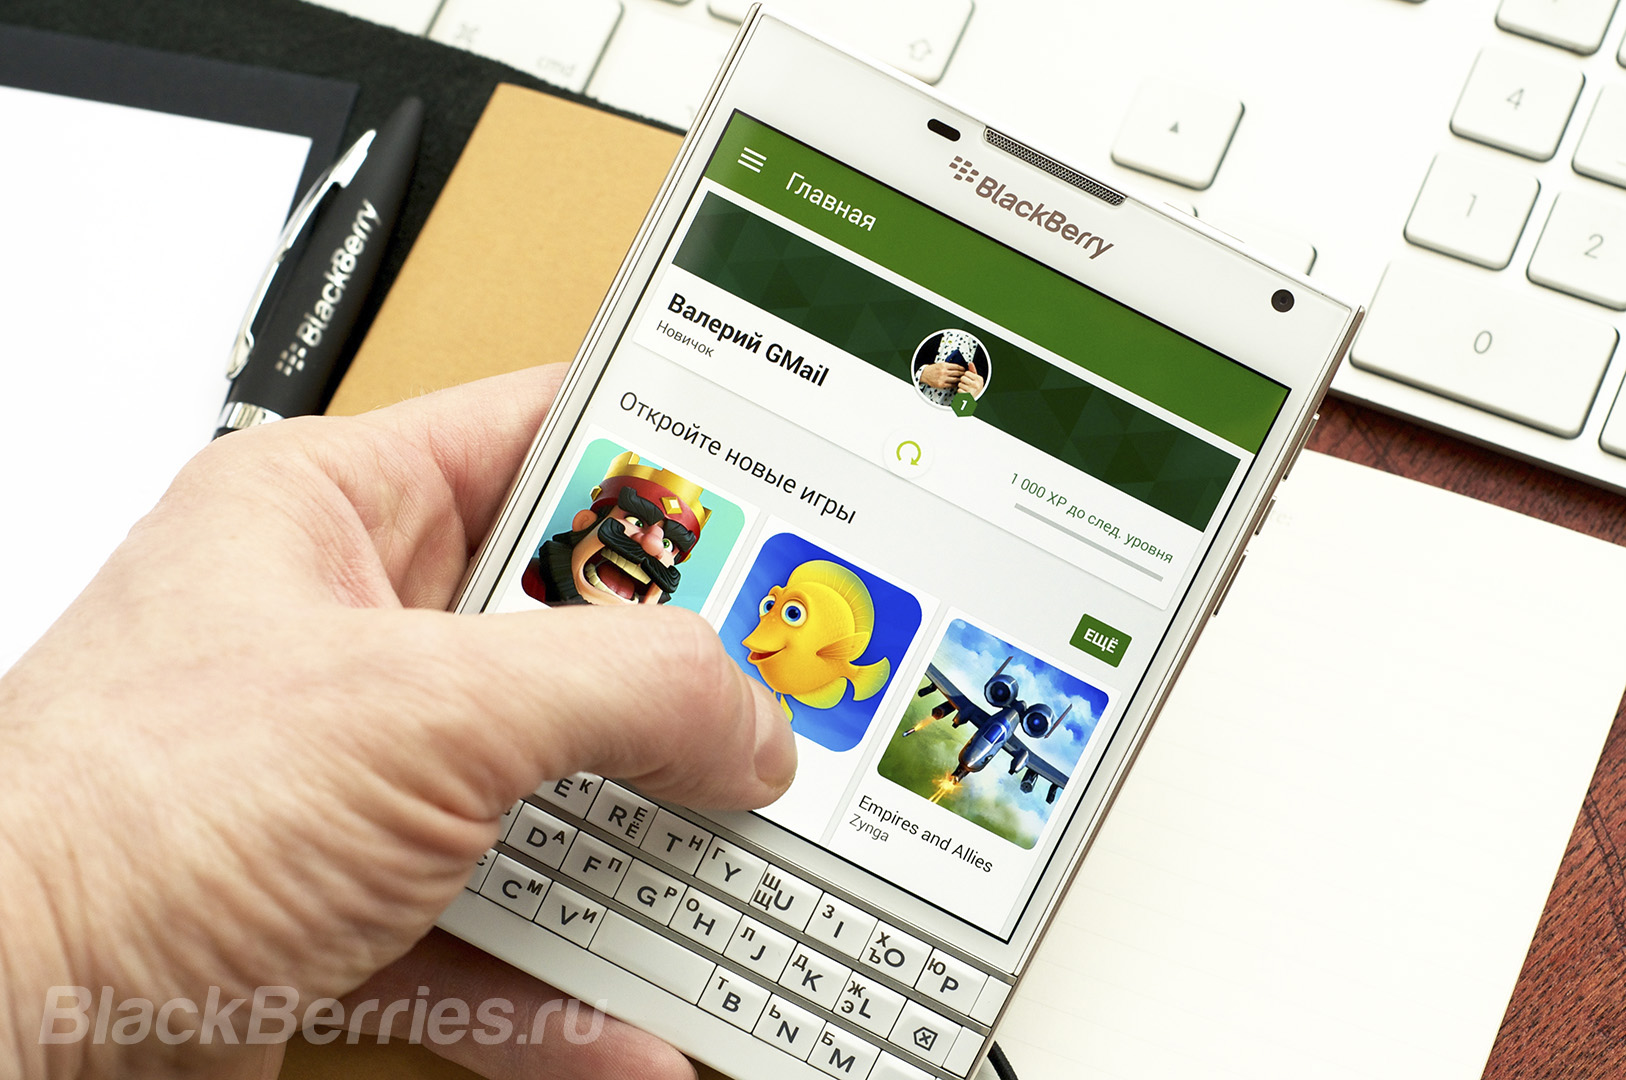 BlackBerry-Passport-Google-Play-Games